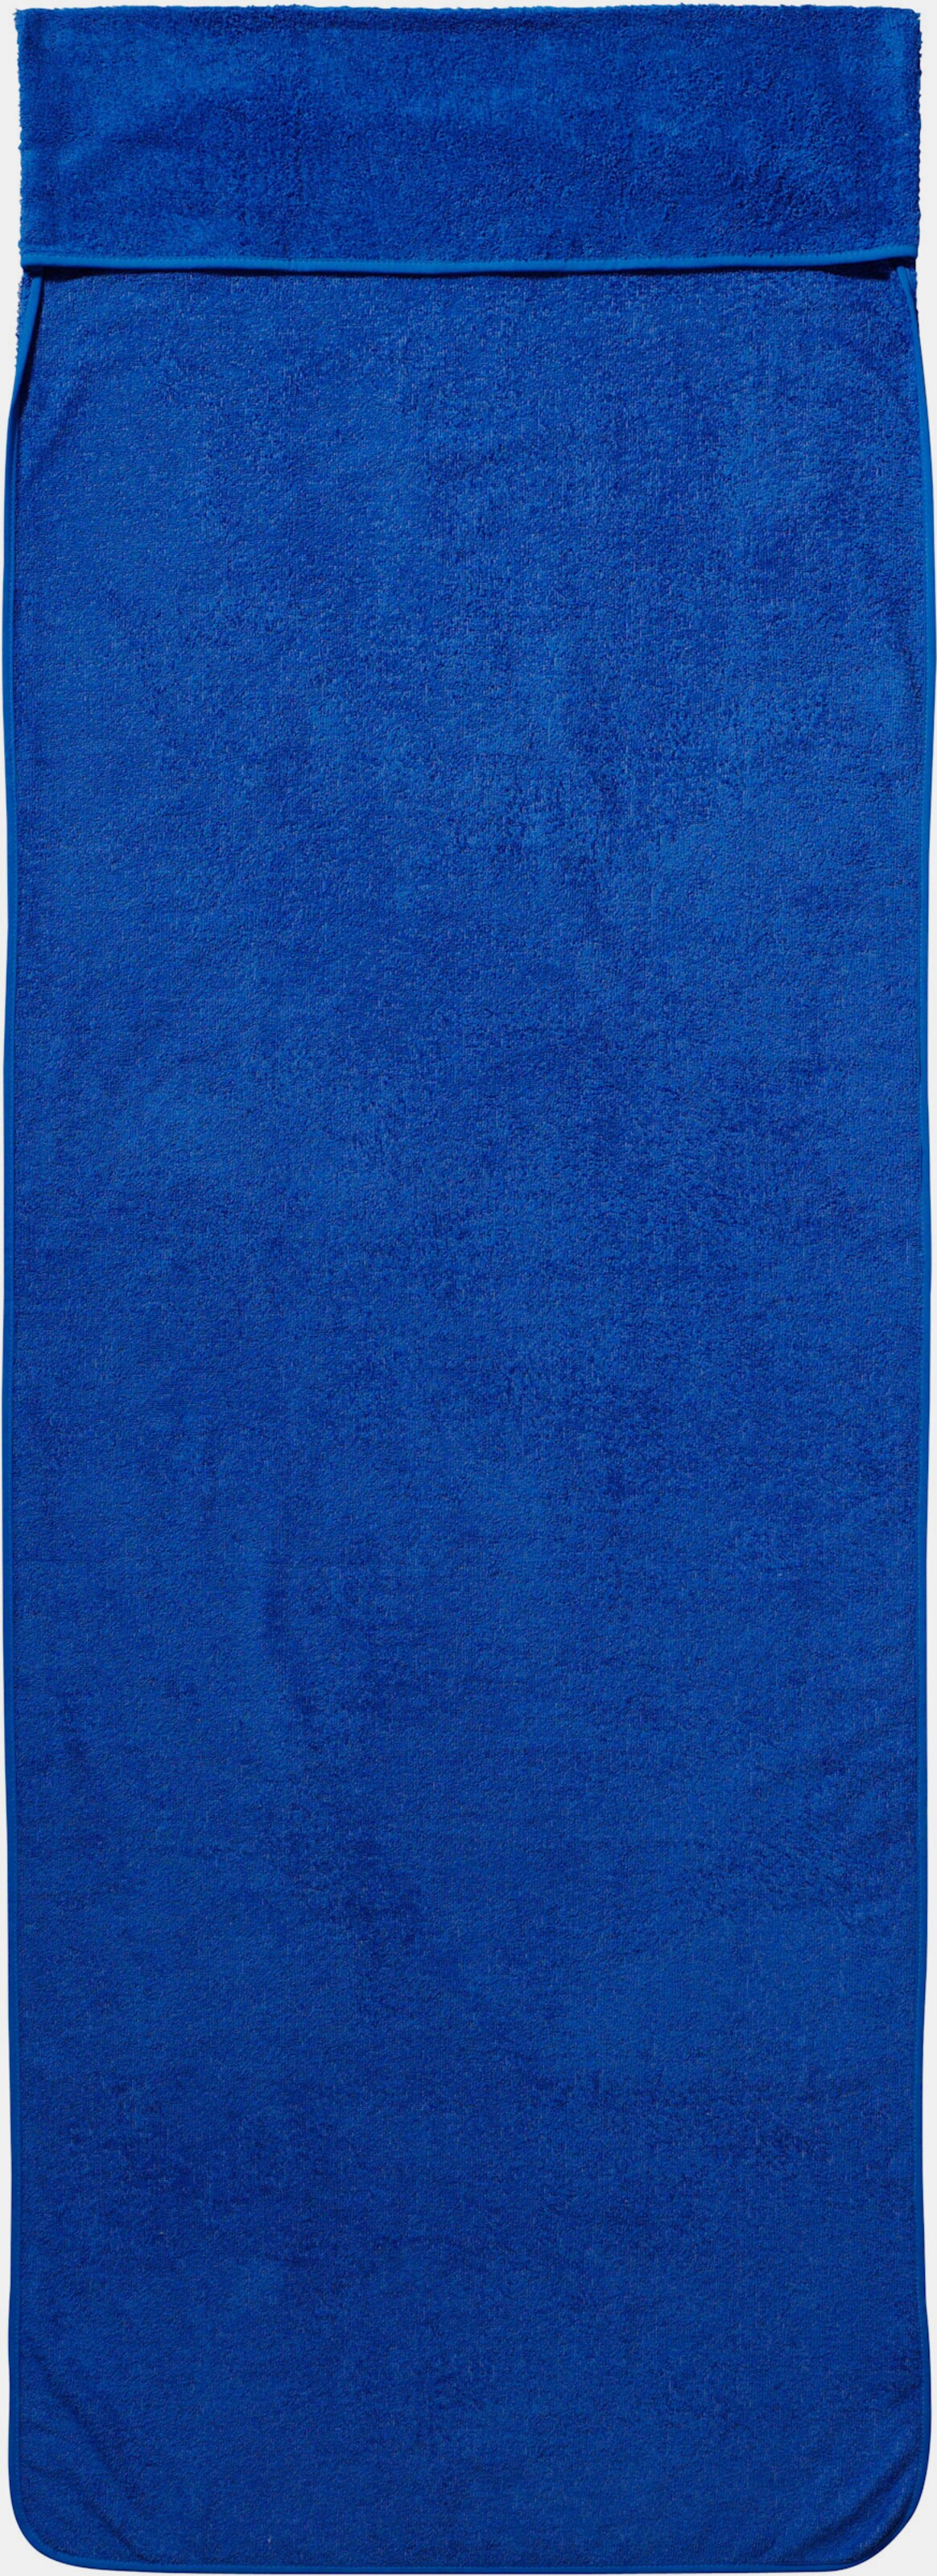 heine home Frottierbezug - blau